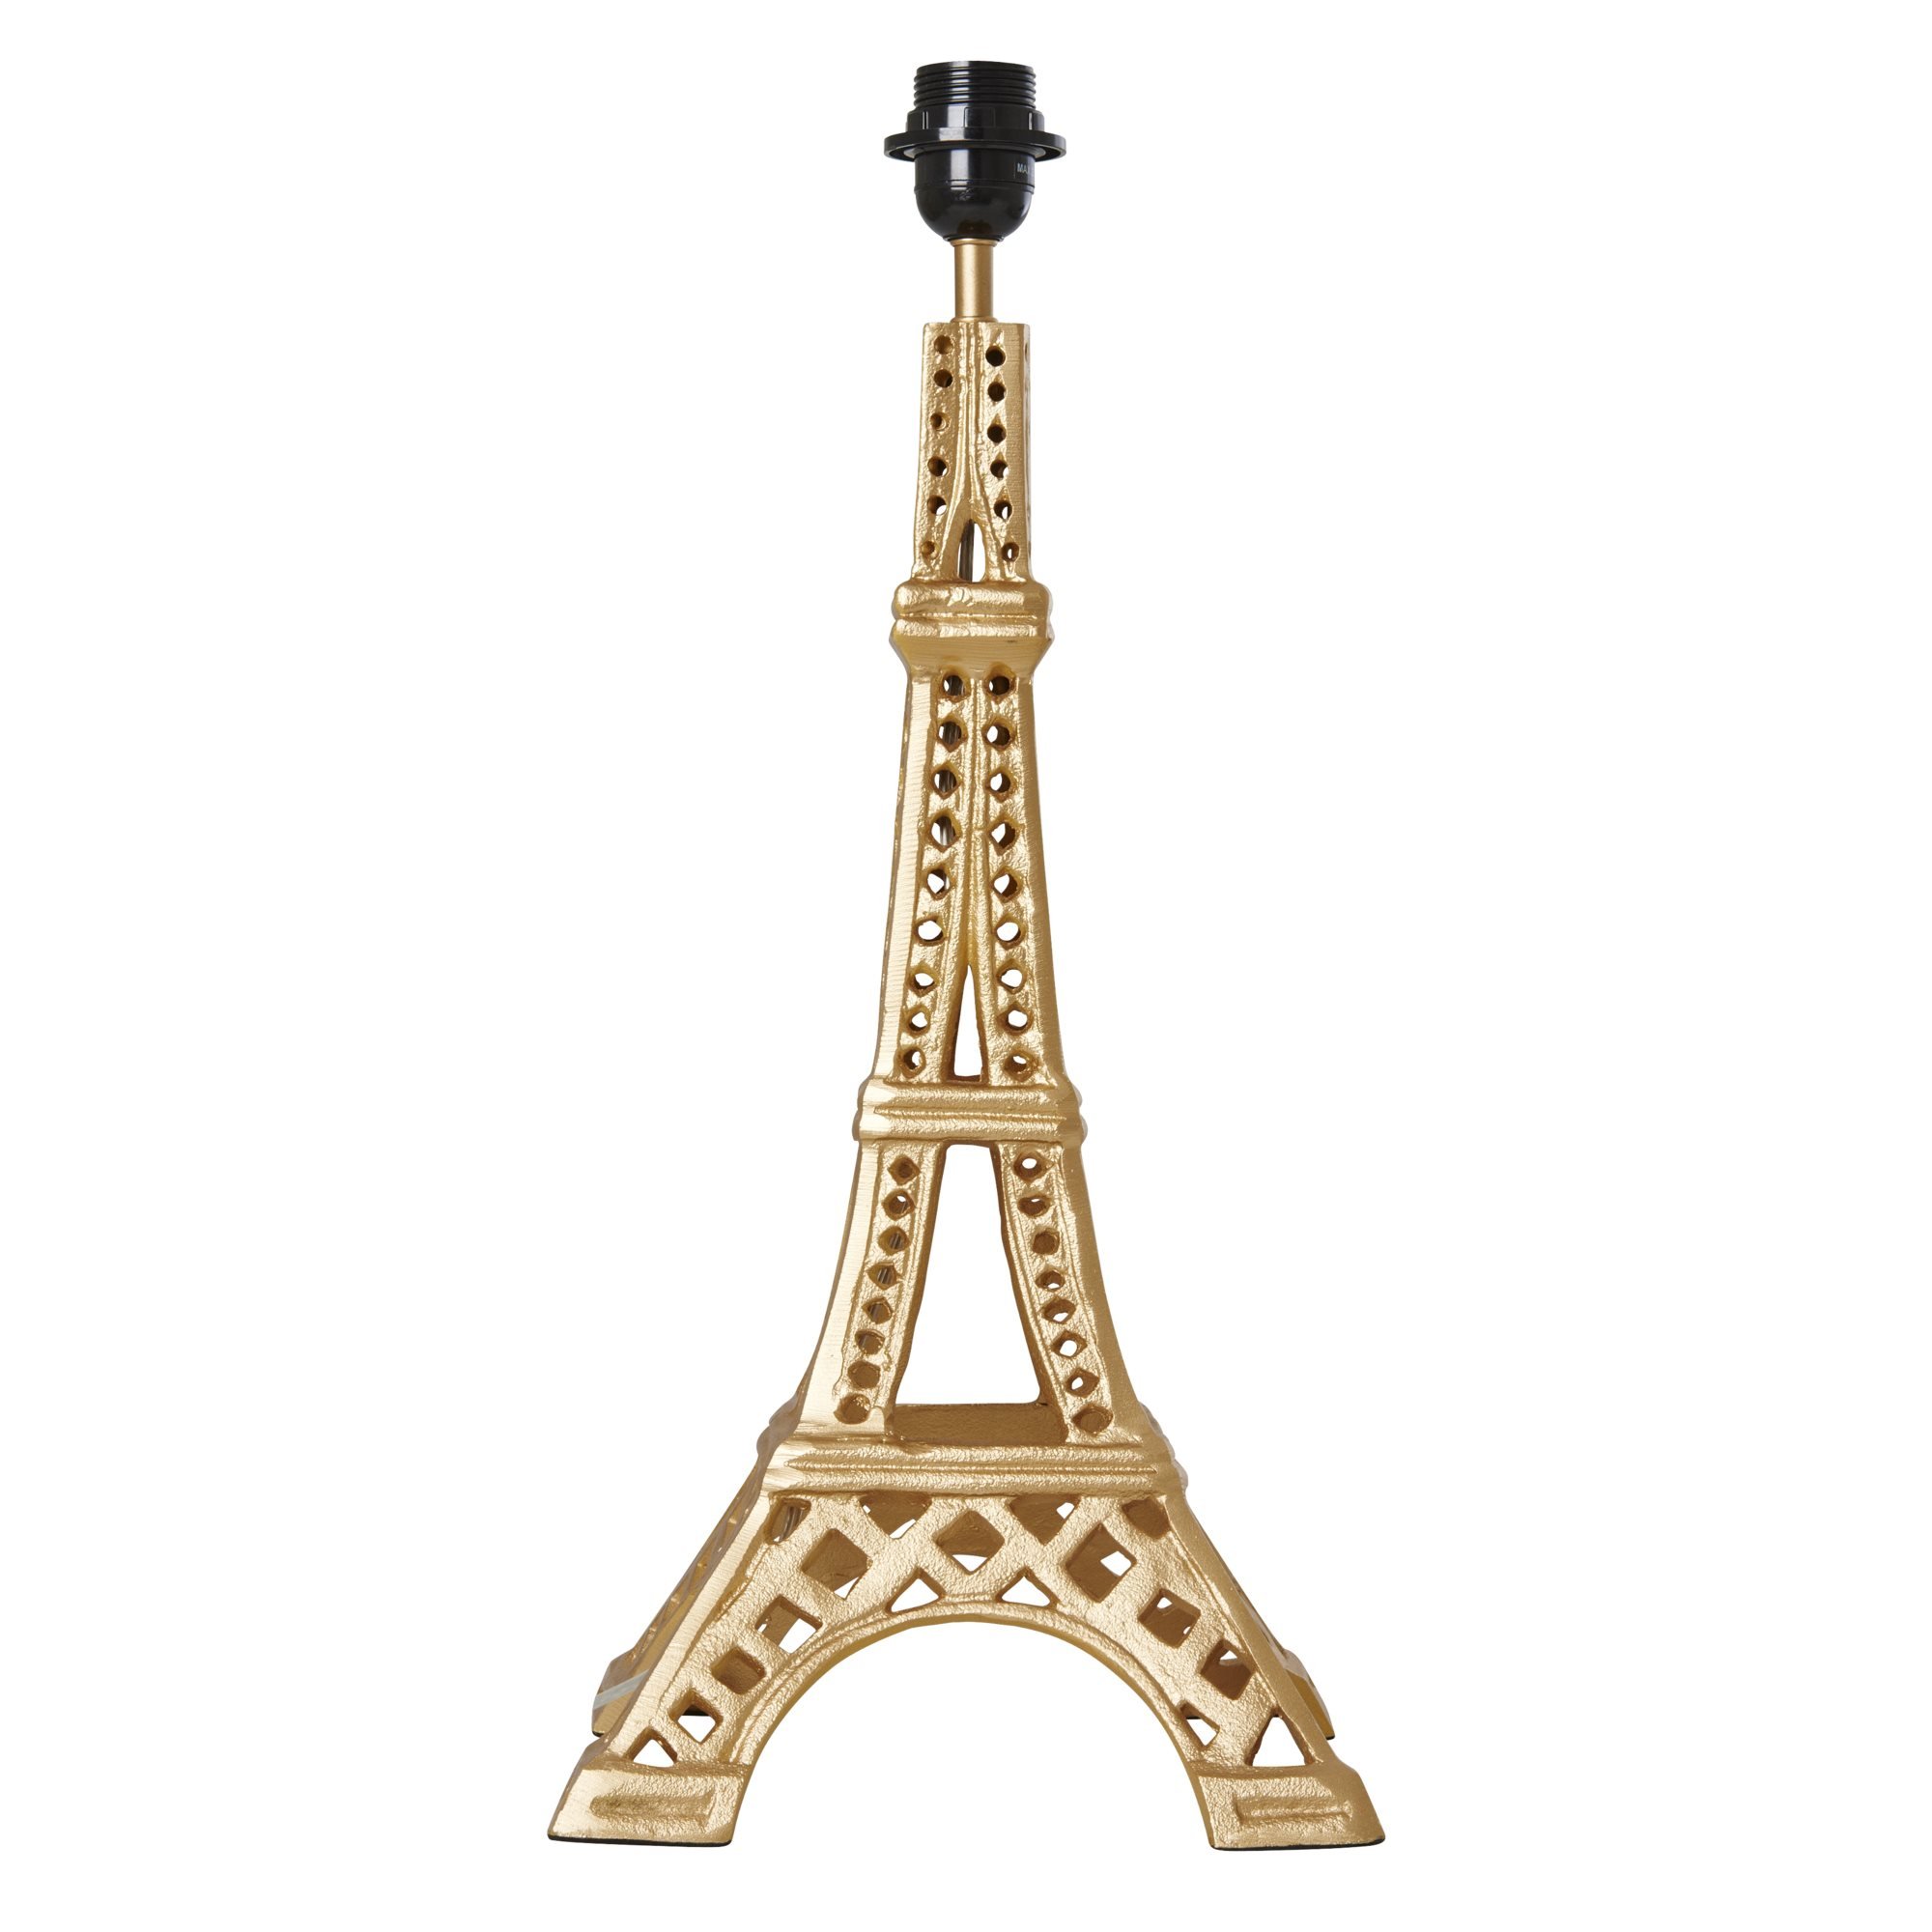 Rice - Metal Guld Bordlampe i Eiffel Tårns Form - Stor